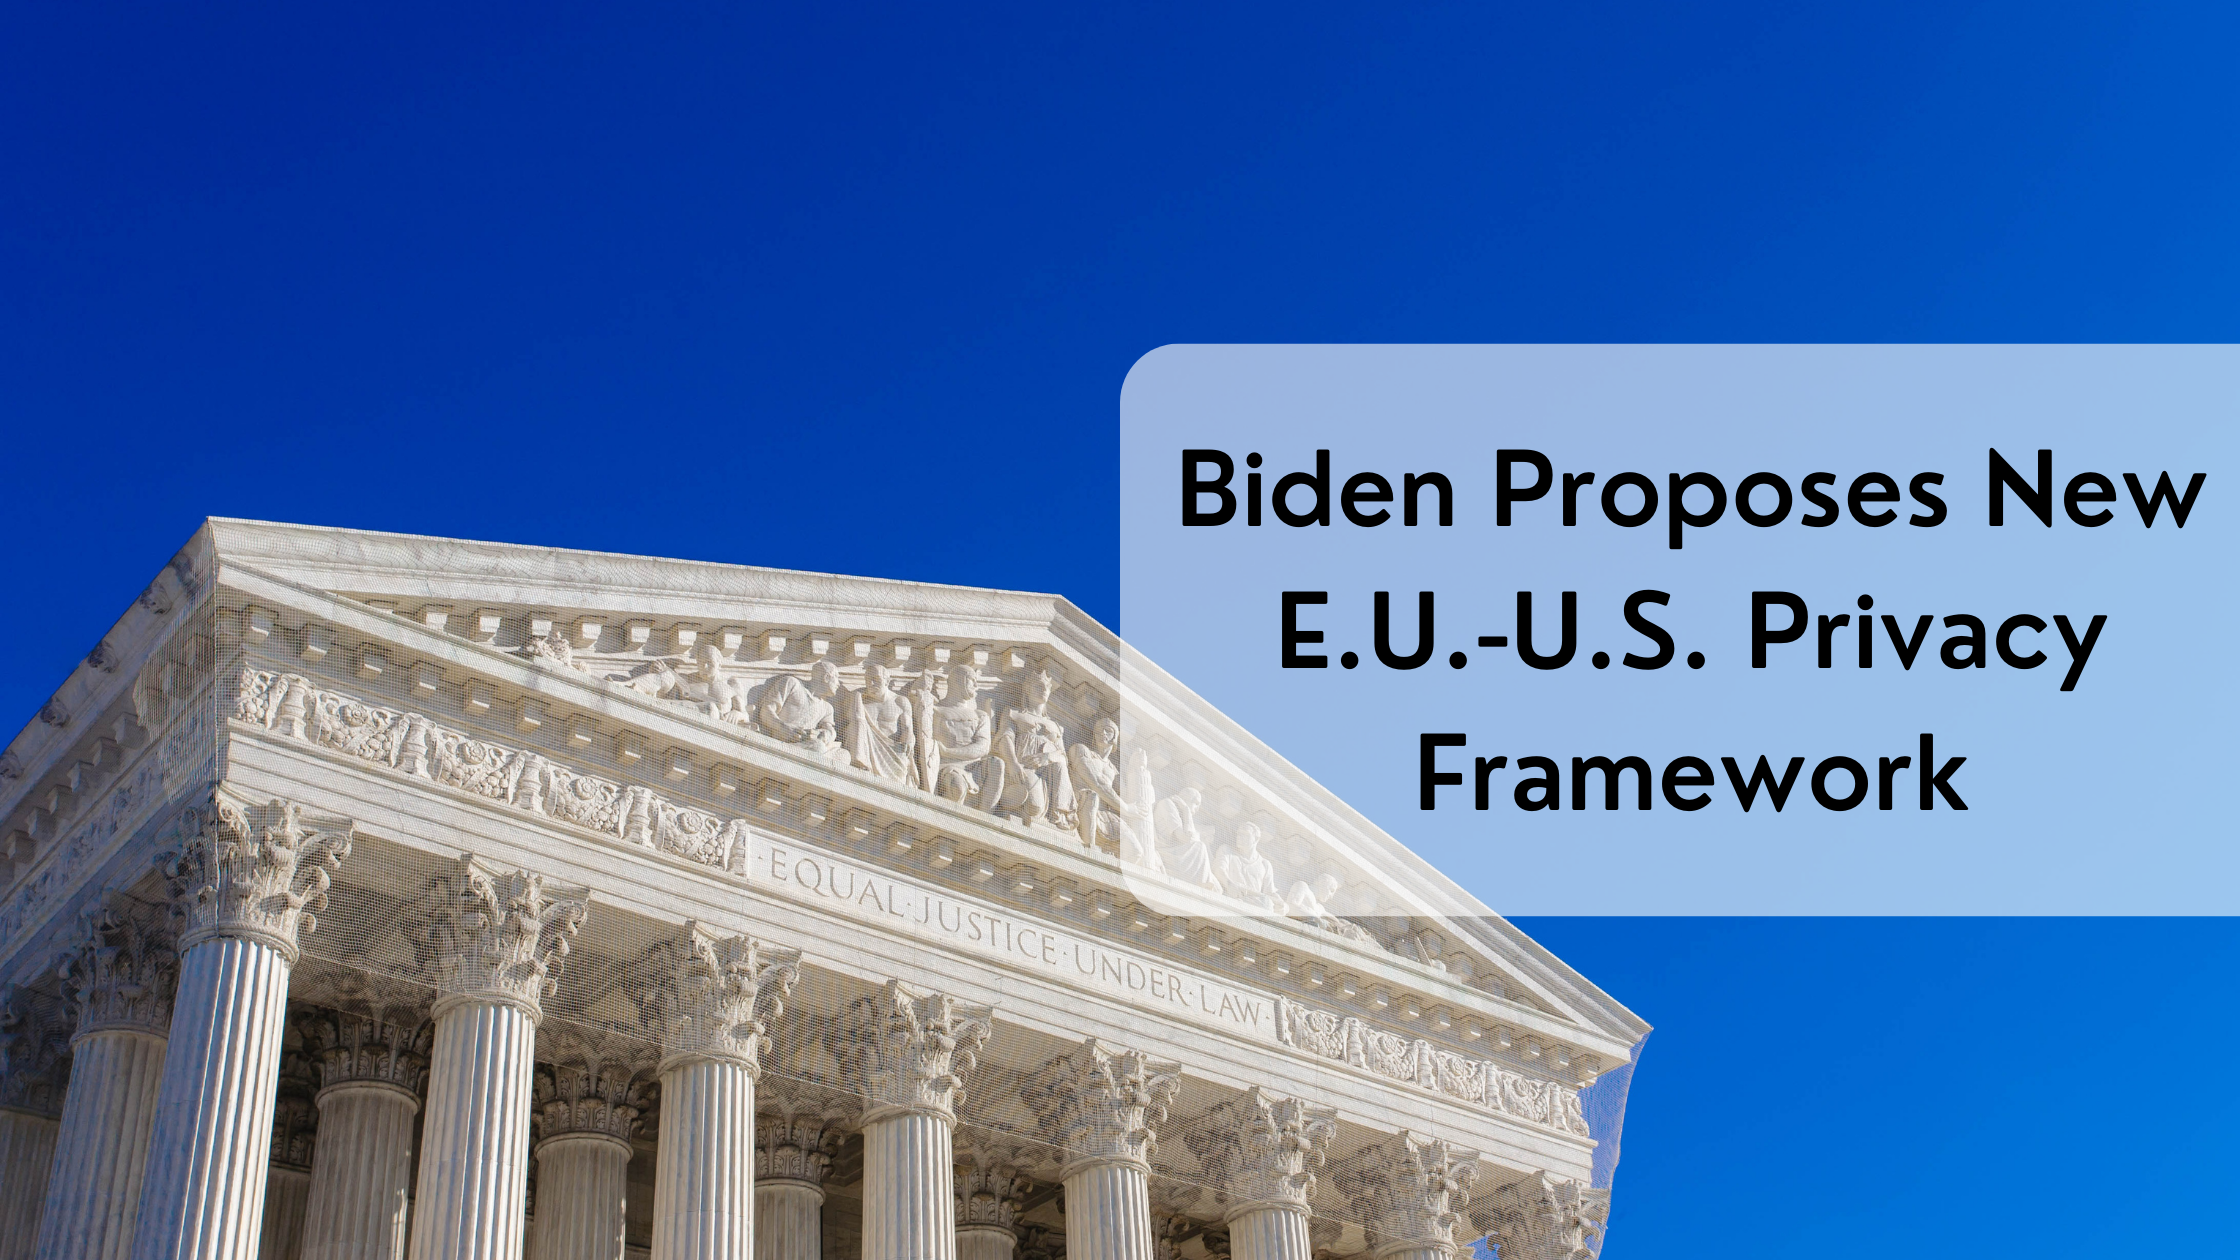 Biden signs order for E.U.-U.S. data privacy framework